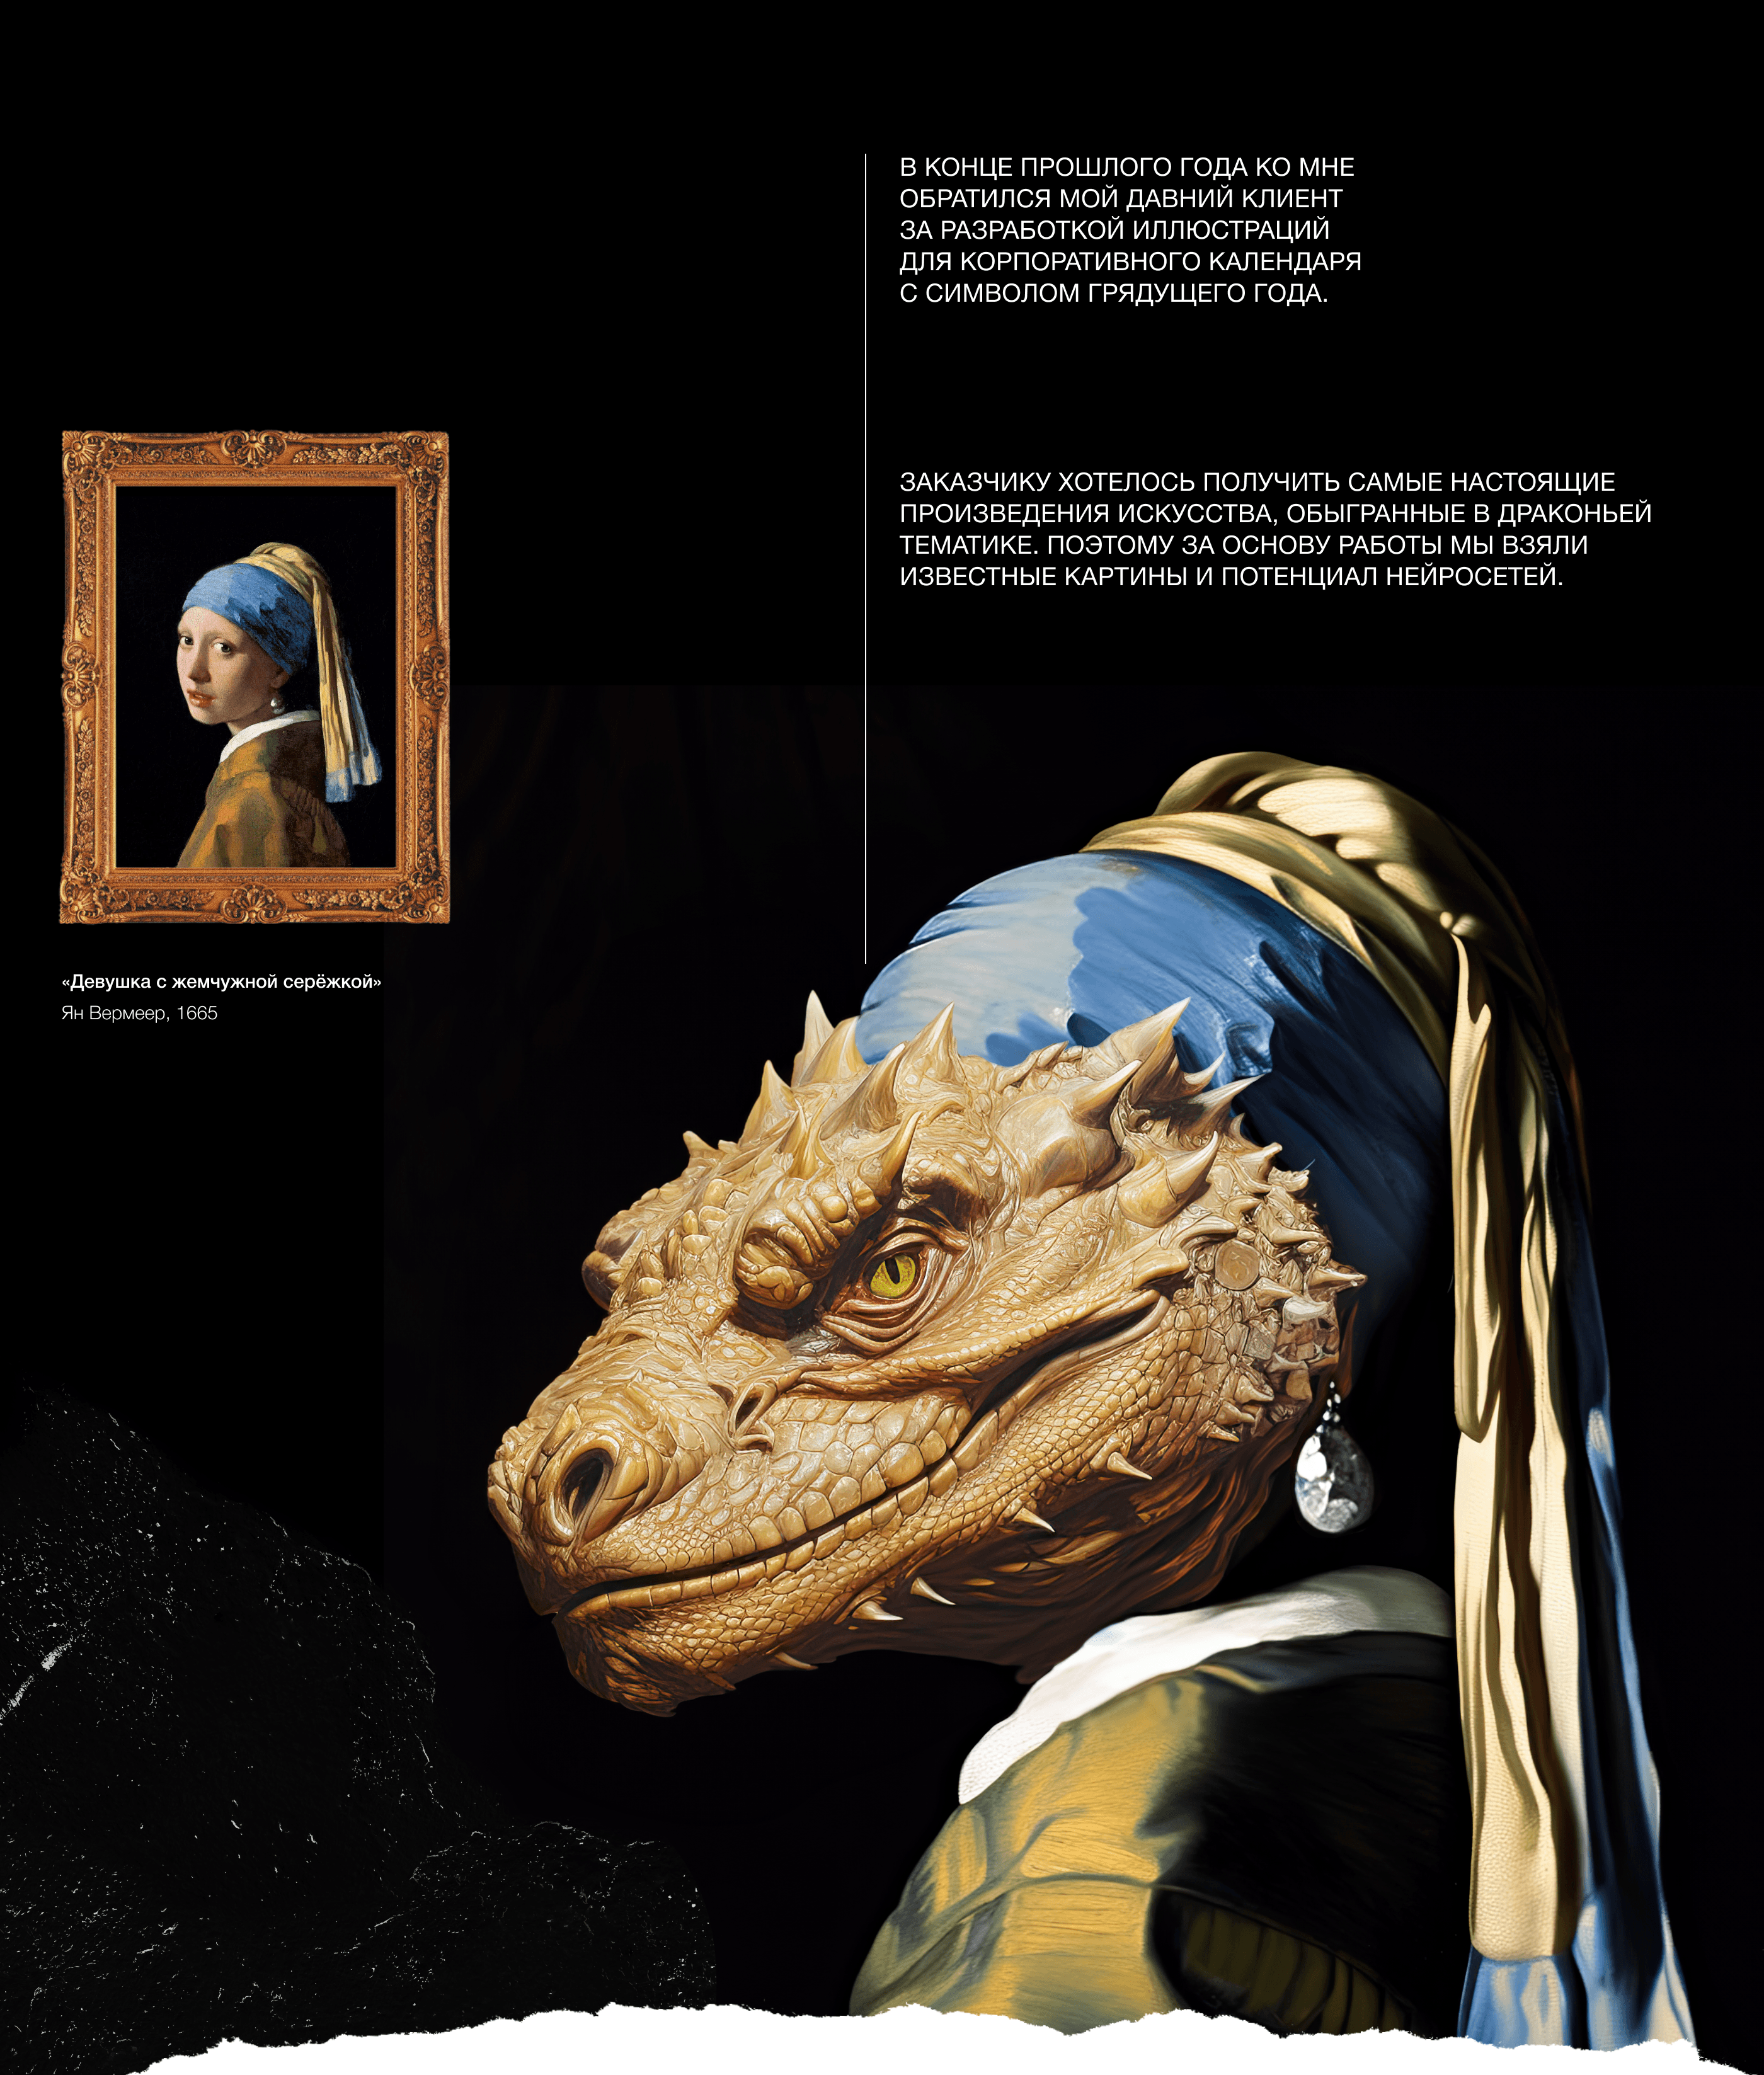 Year of the Dragon | Digital Illustration with AI — Изображение №2 — Иллюстрация, Графика на Dprofile